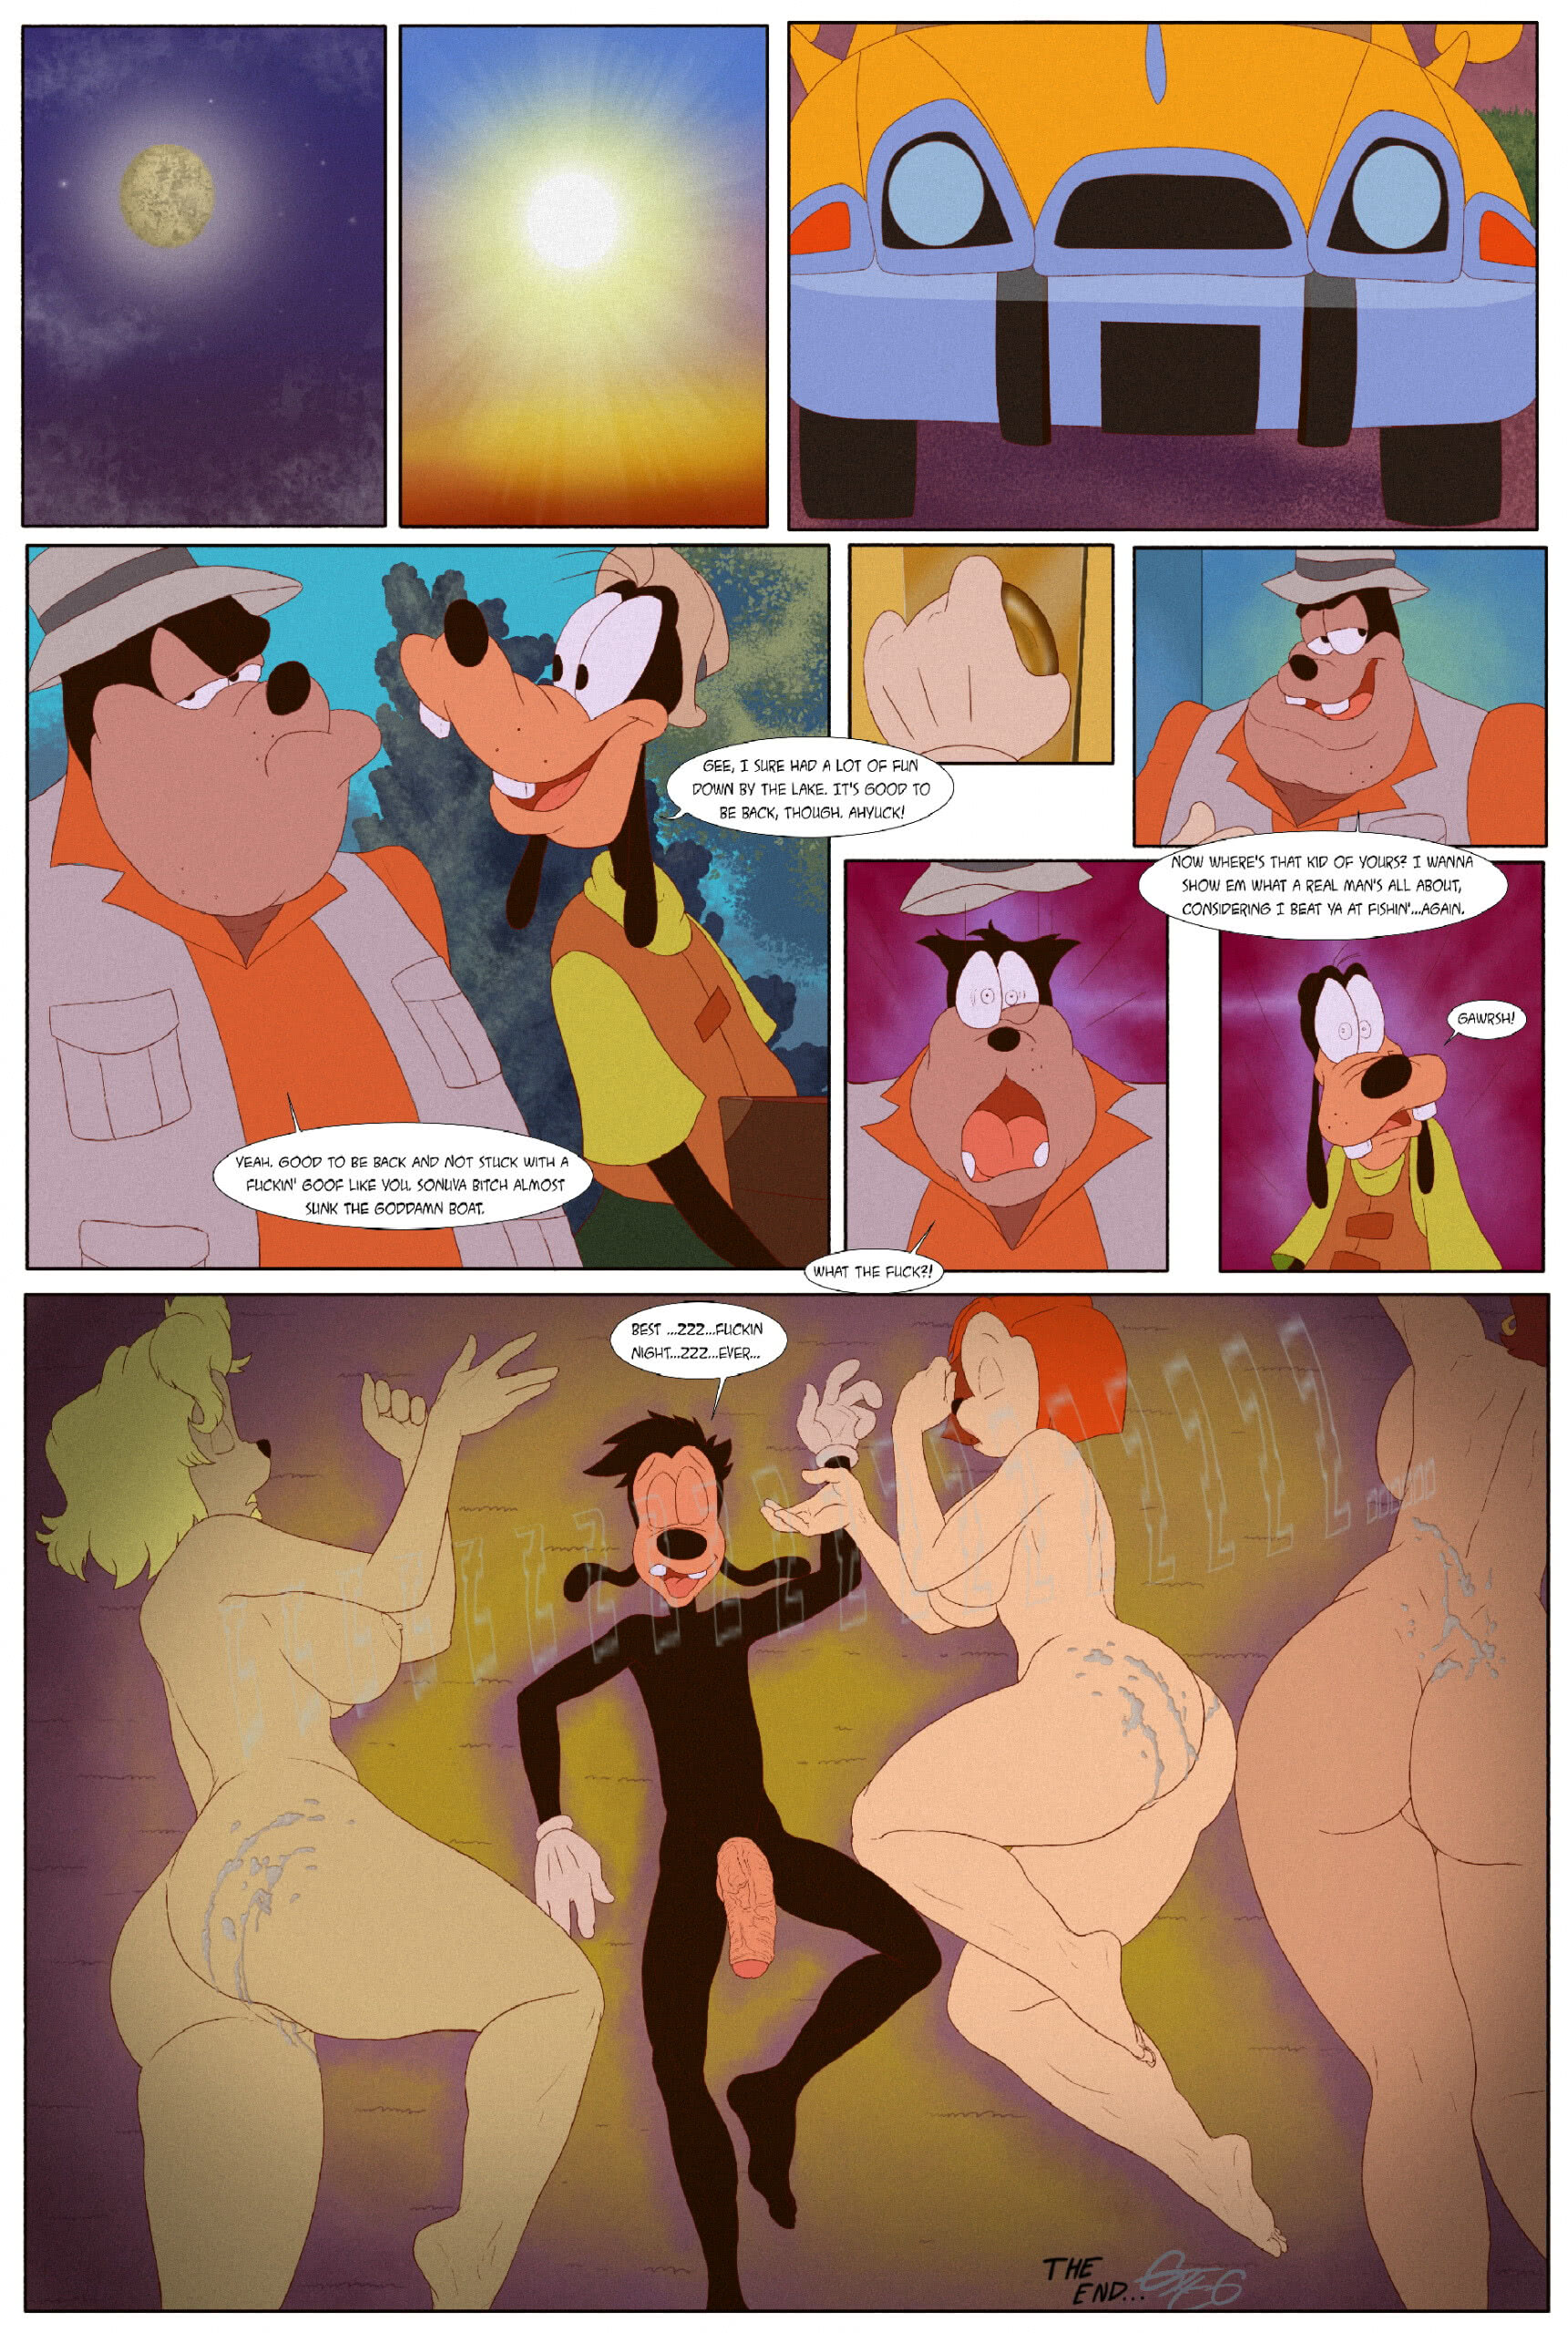 A Goofy porno - Page 16